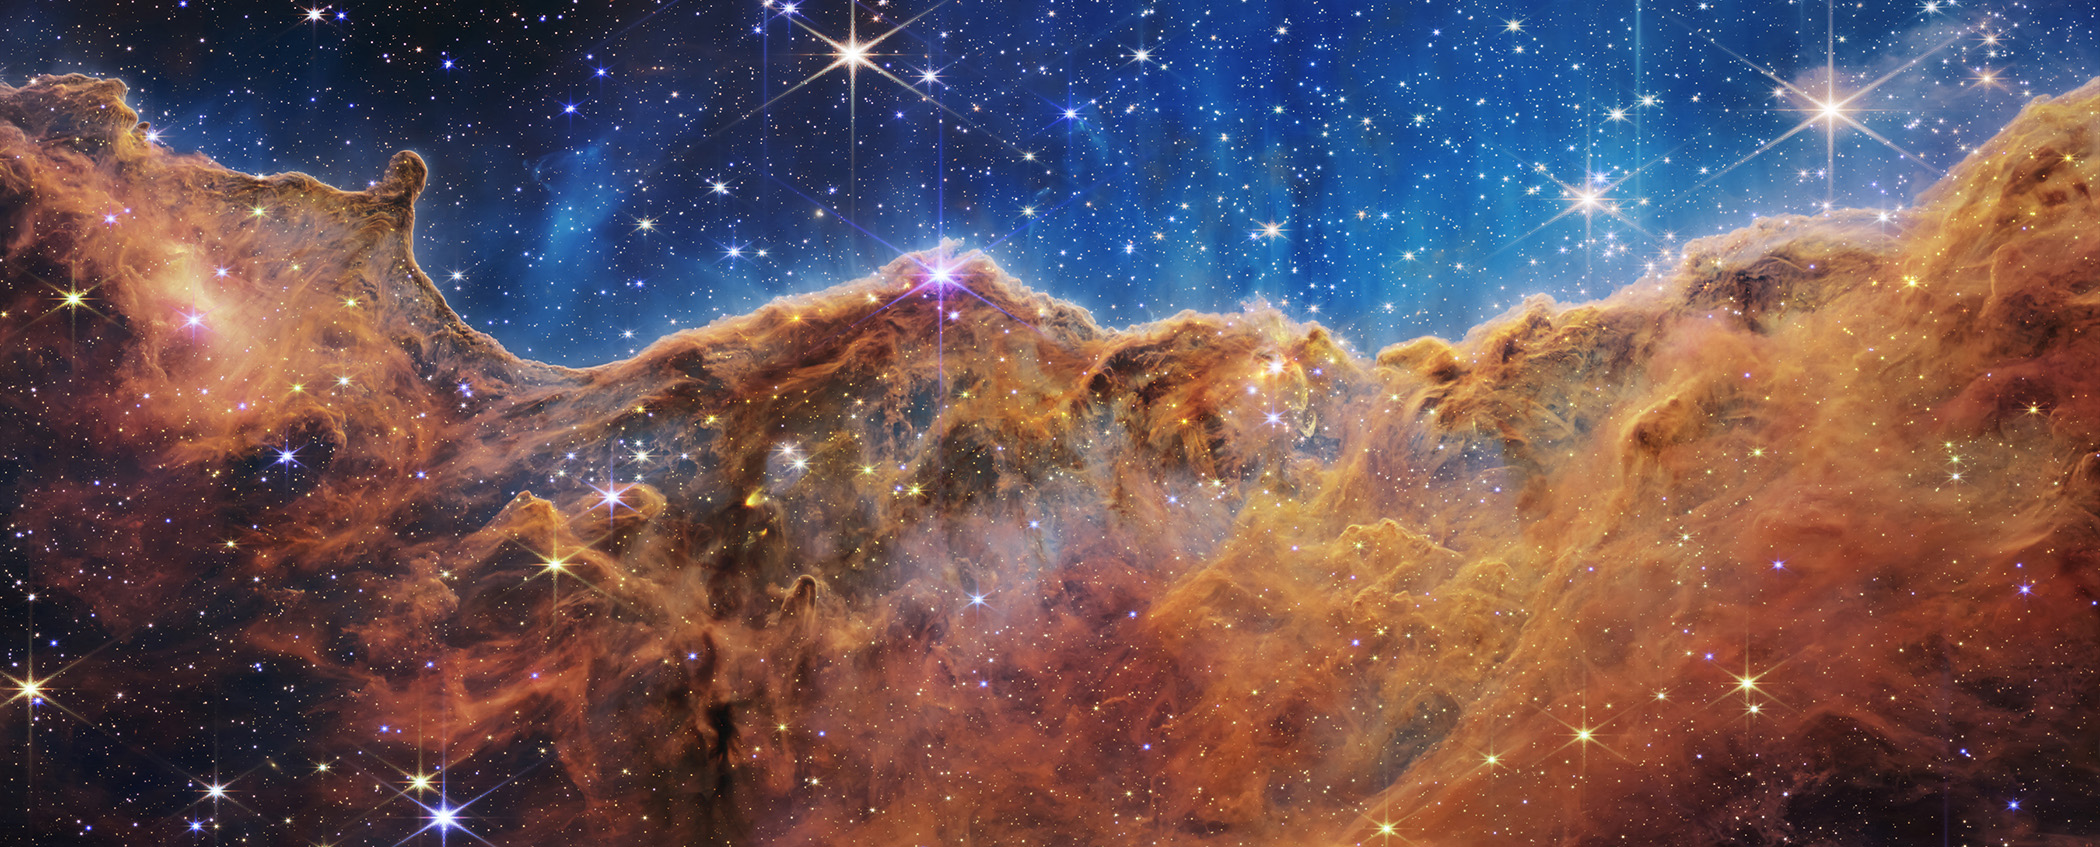 star-forming region in Carina Nebula